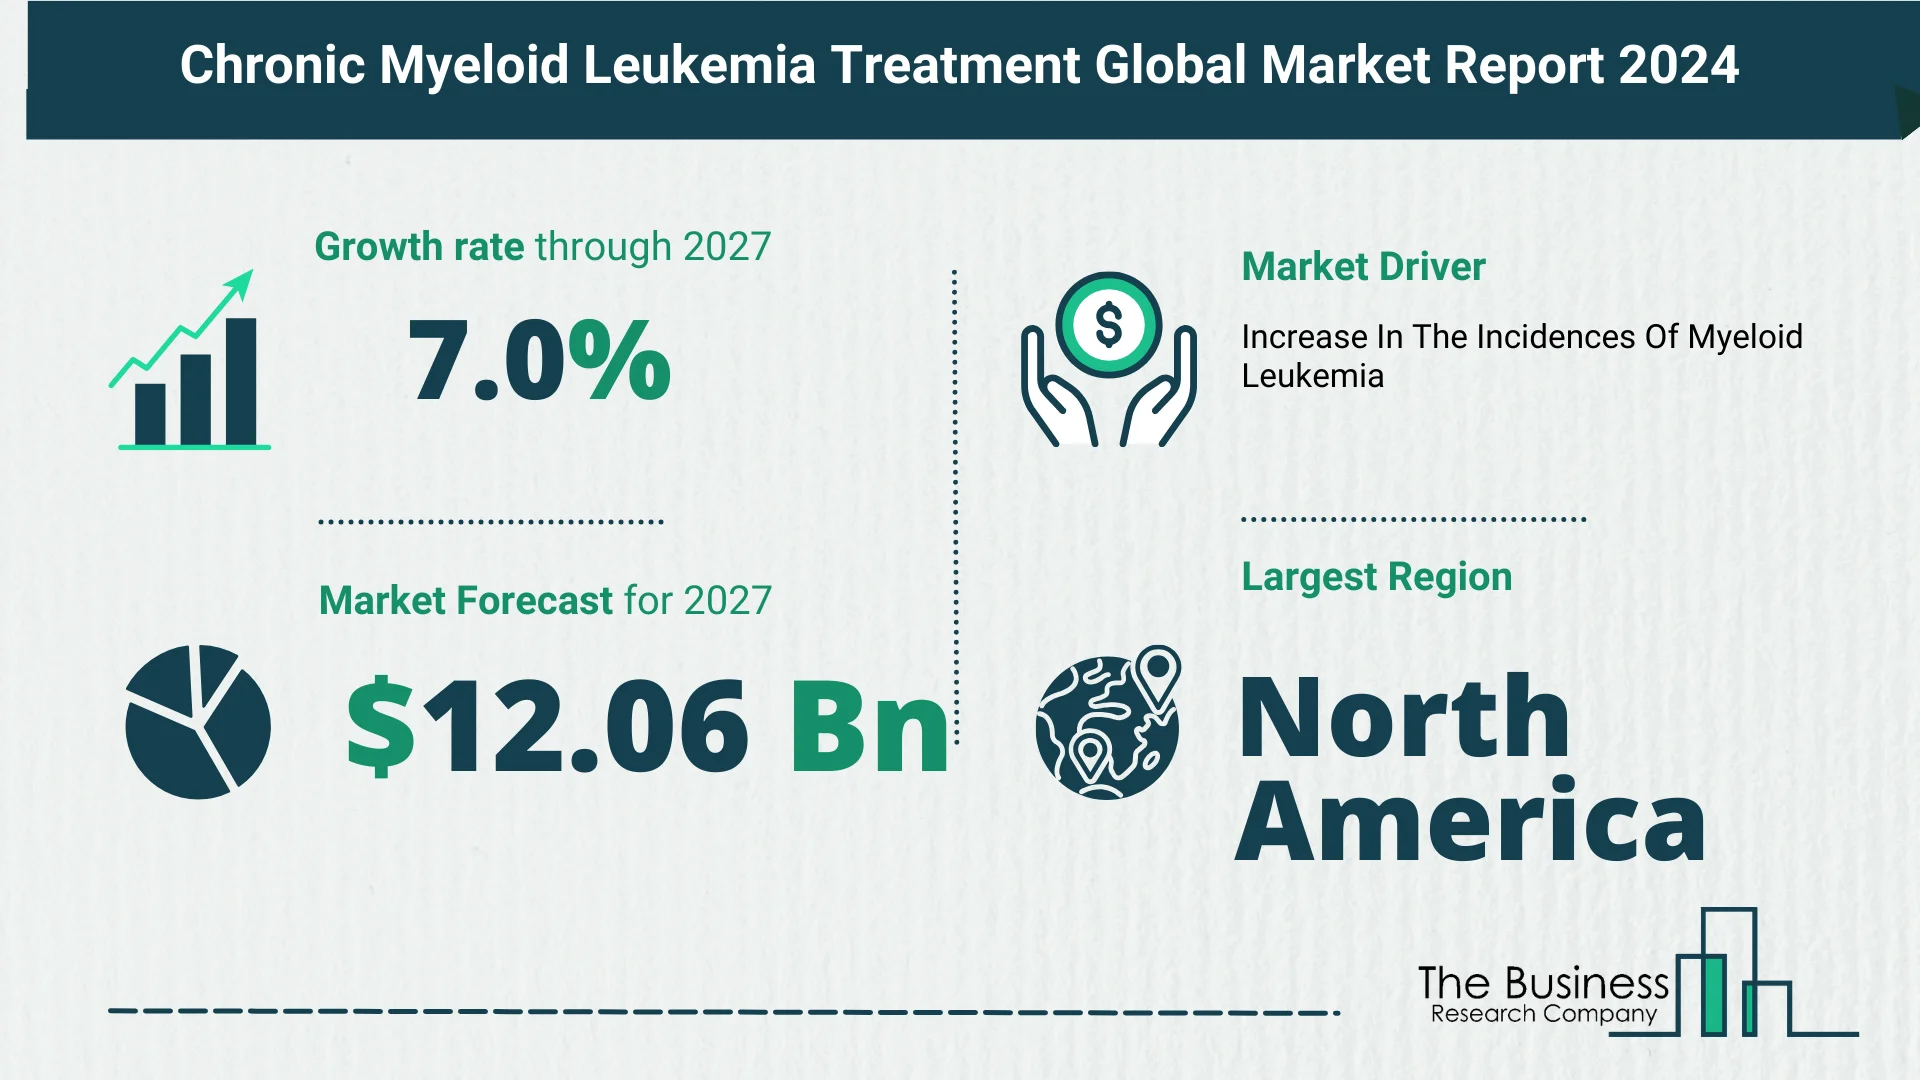 Global Chronic Myeloid Leukemia Treatment Market Size